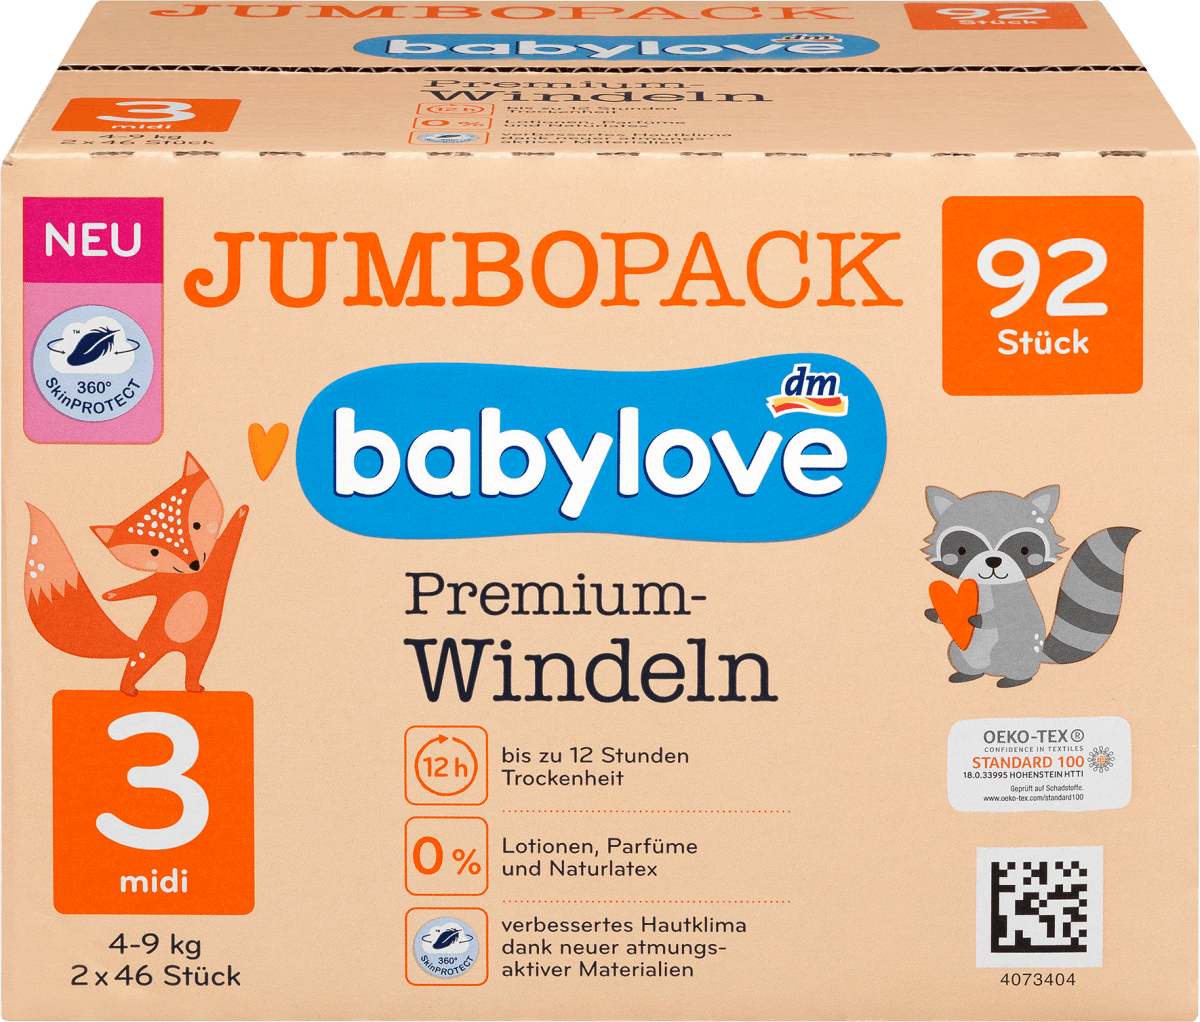 babylove Premium Pants - Taille 6 - XXL - 18-30 kg, pack jumbo